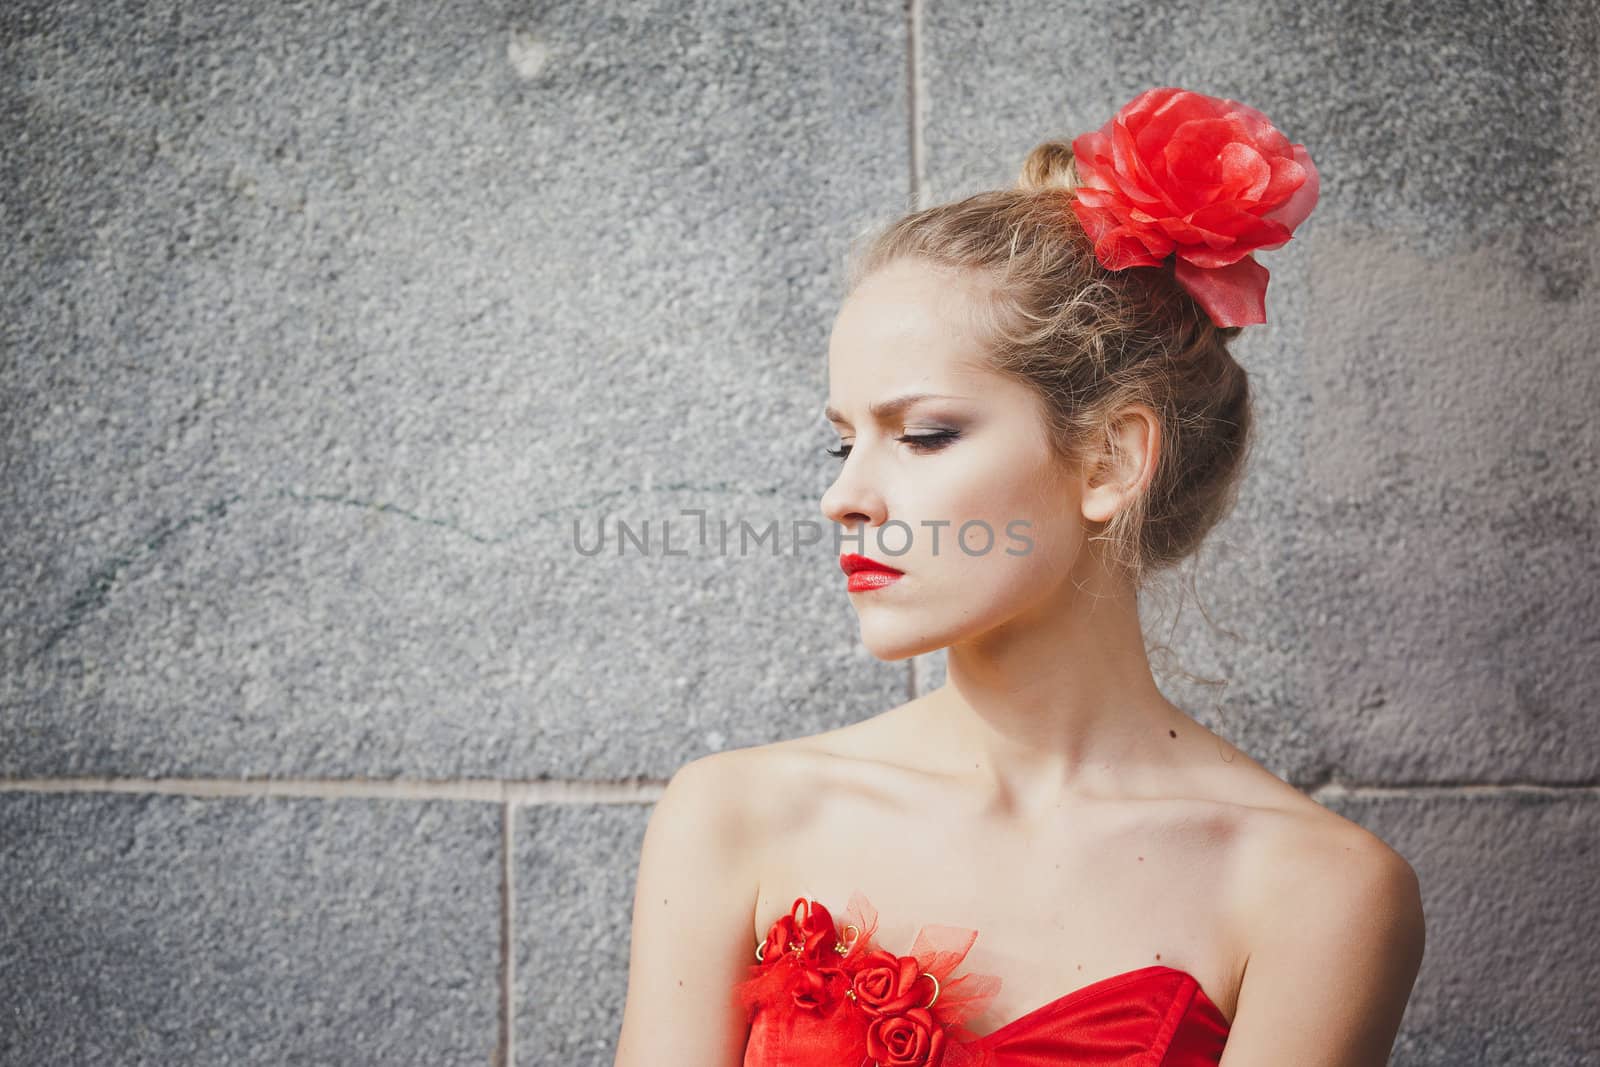 model, red, dress, flower, hair, eyes, lipstick, fall, girl, beauty, grace, eyes, waiting, concrete